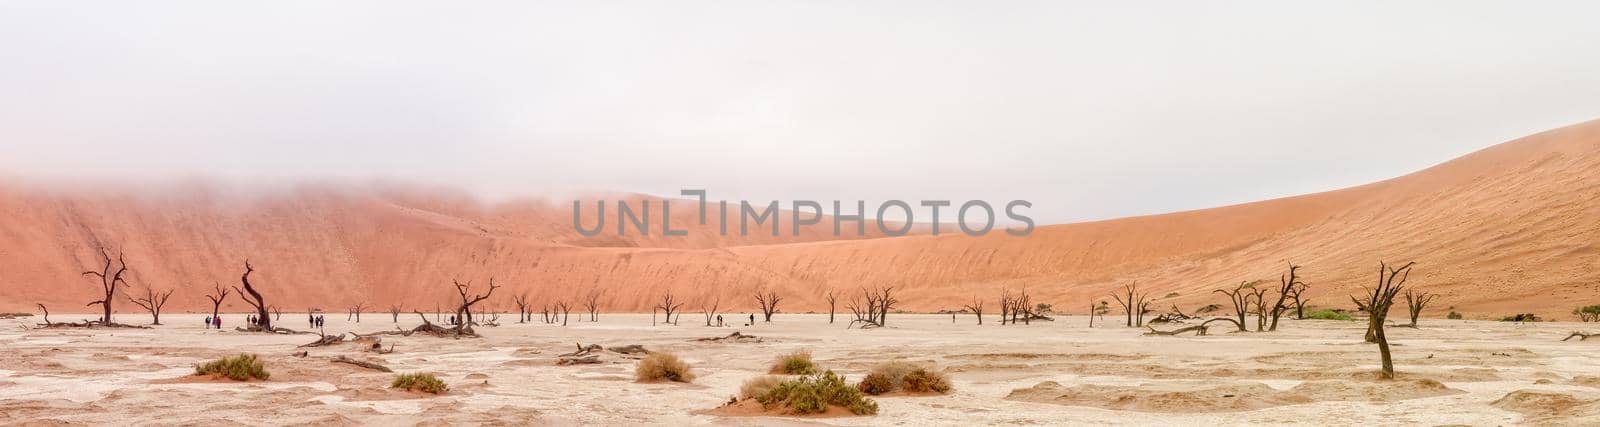 Panorama of Deadvlei near Sossusvlei in Namibia by dpreezg